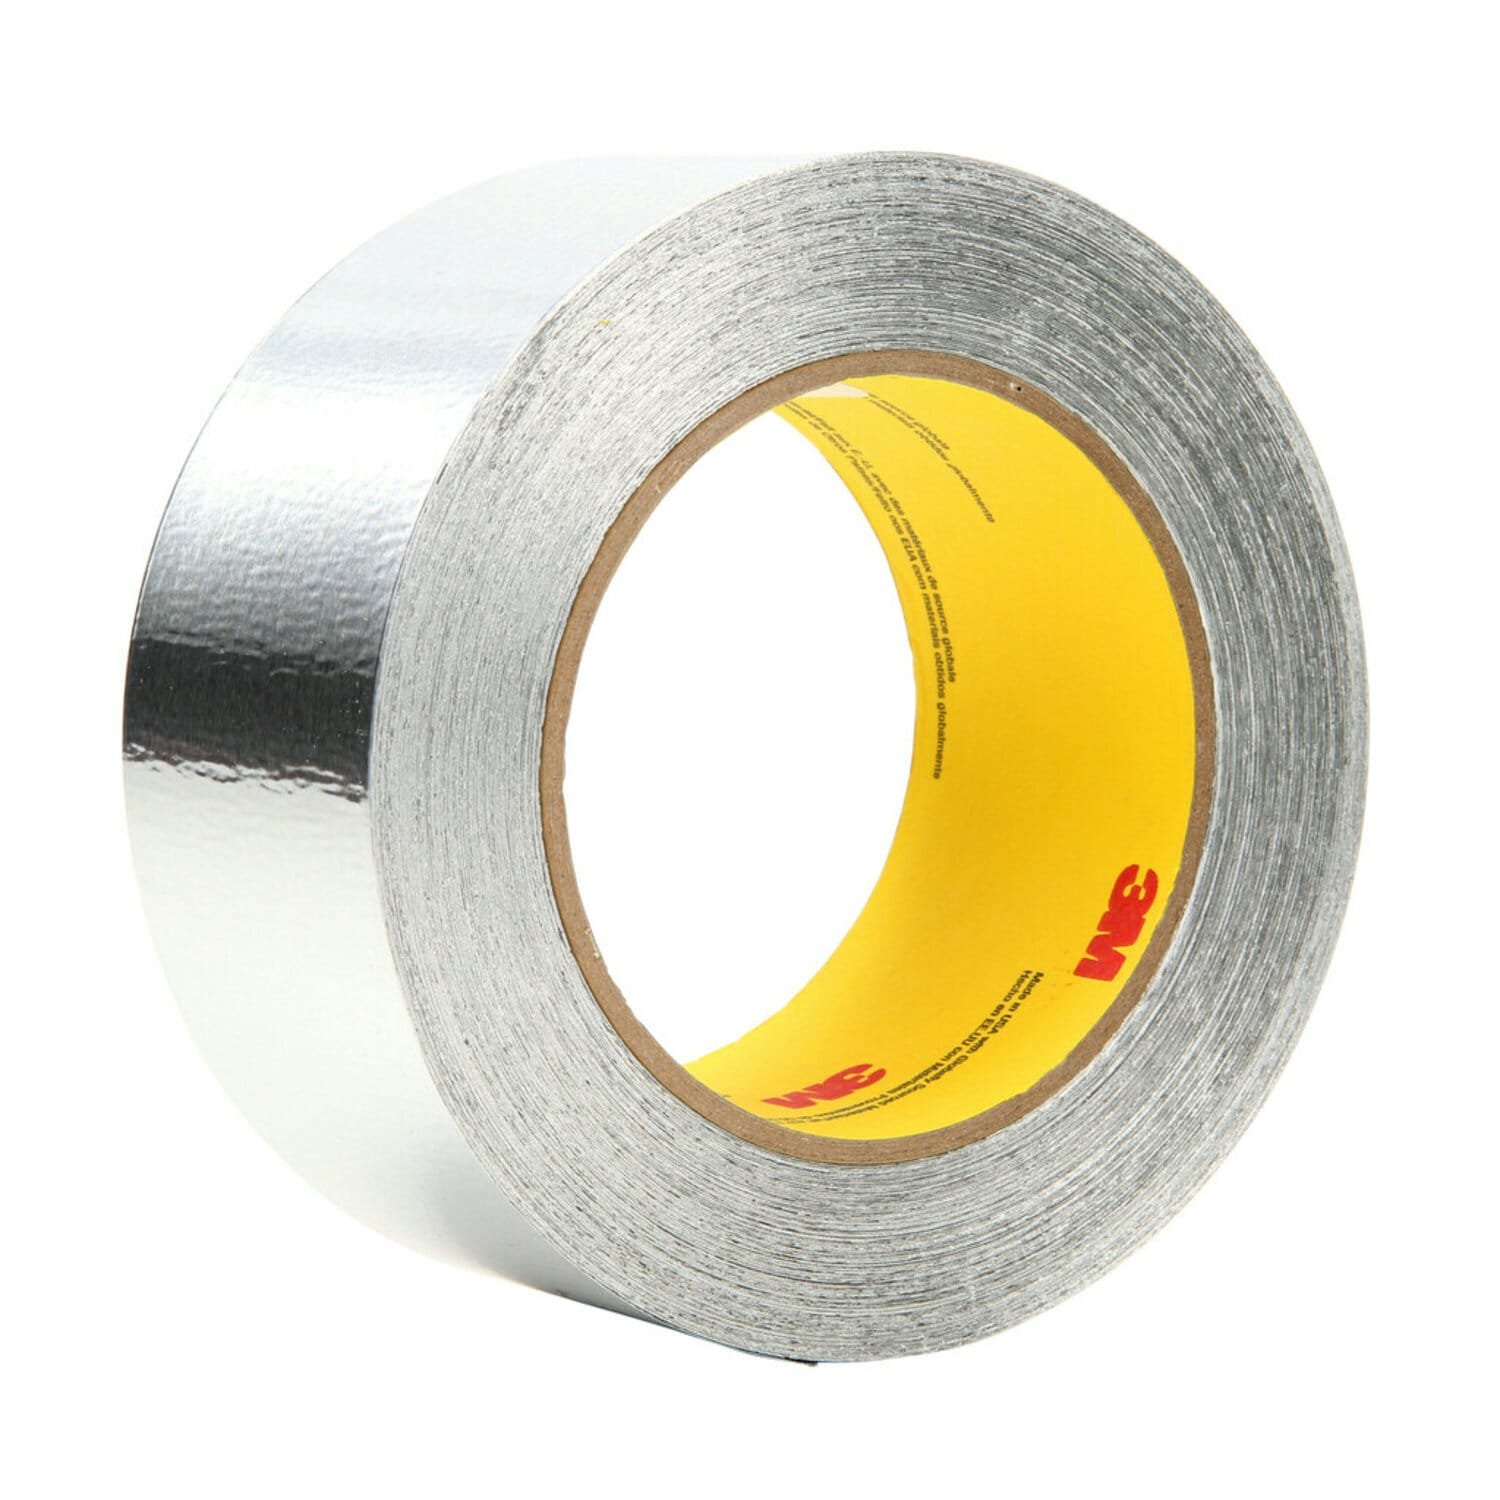 7100053813 - 3M Aluminum Foil Tape 425, Silver, 50 mm x 55 m, 4.6 mil, 24 rolls per
case